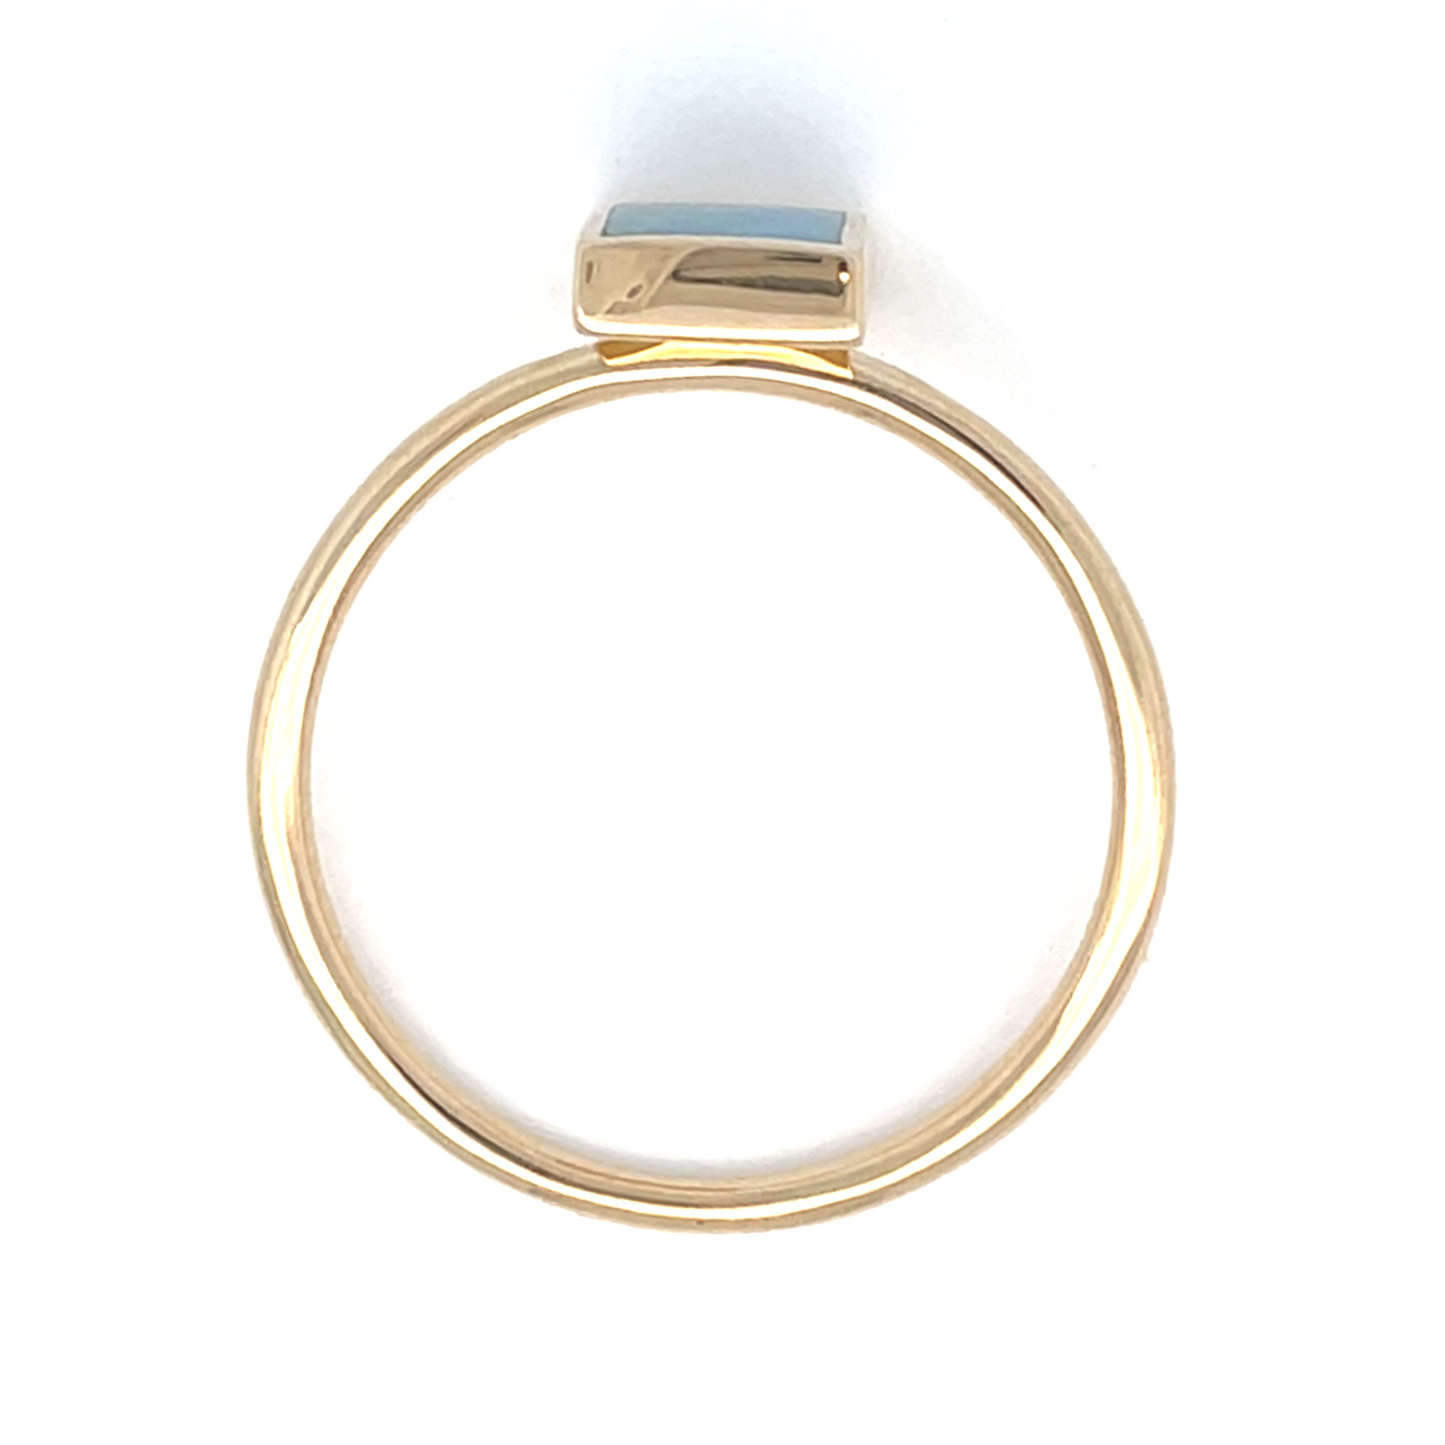 Rectangular Australian Opal Doublet Ring